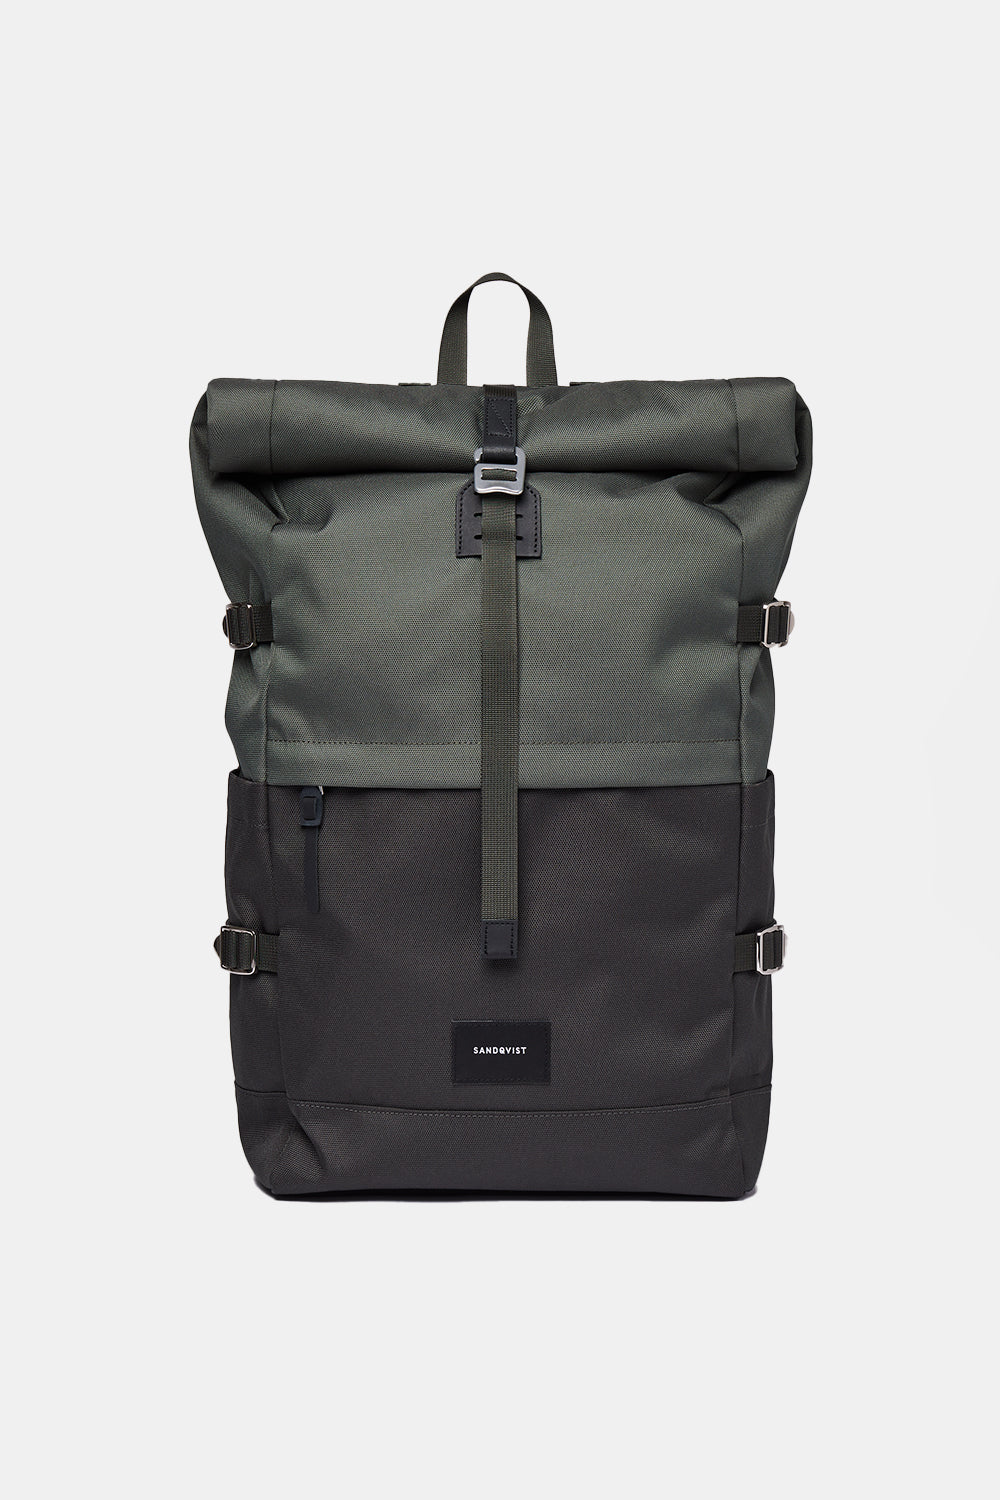 Sandqvist Bernt Backpack (Multi Green / Black) | Number Six